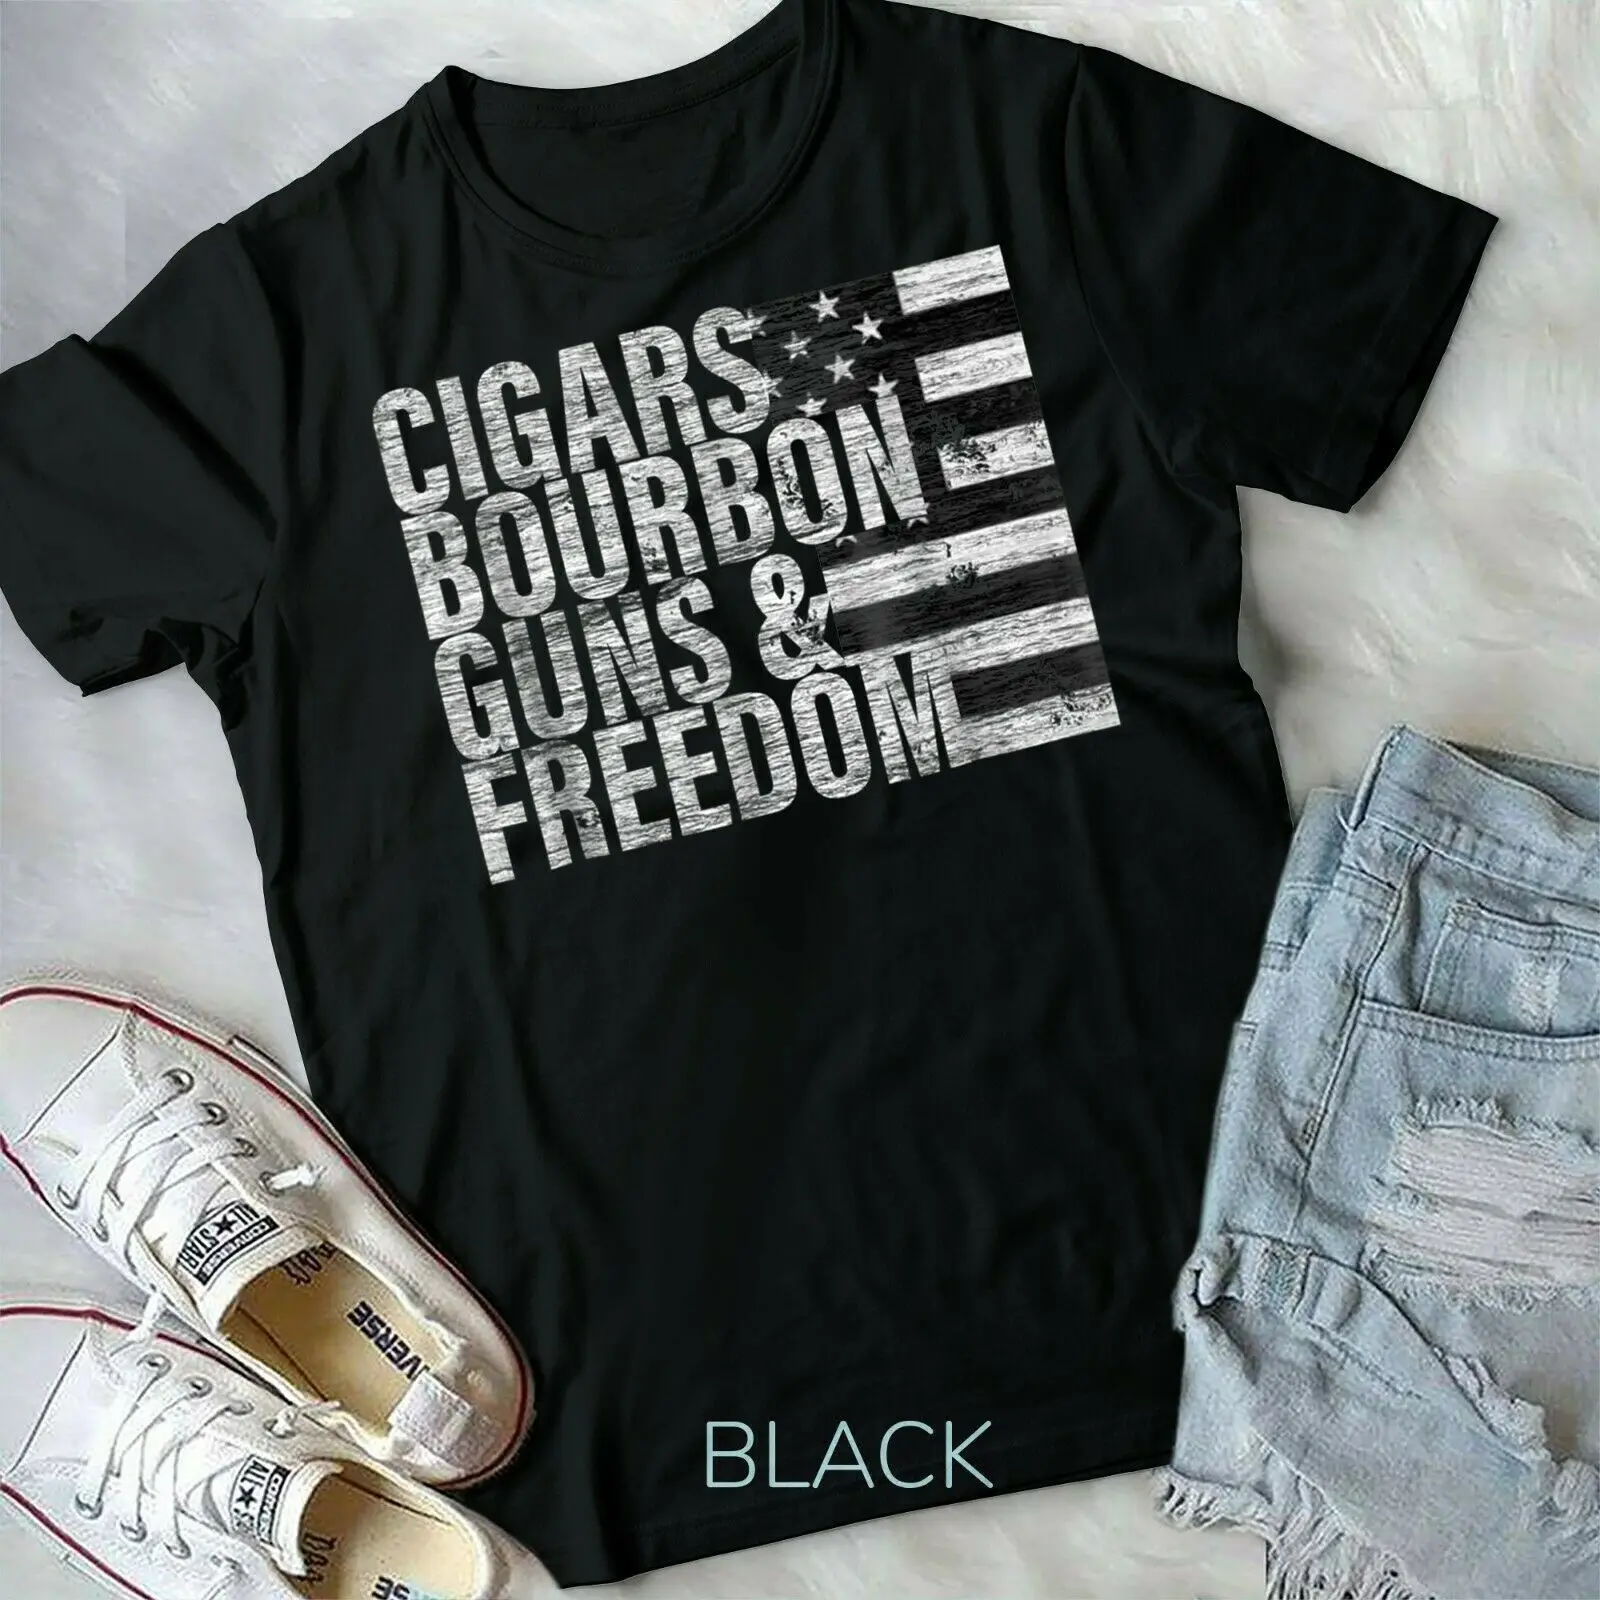 Cigars Bourbon Guns Freedom Flag O-Neck Cotton T Shirt Men Casual Short Sleeve Tees Tops Camisetas Mujer